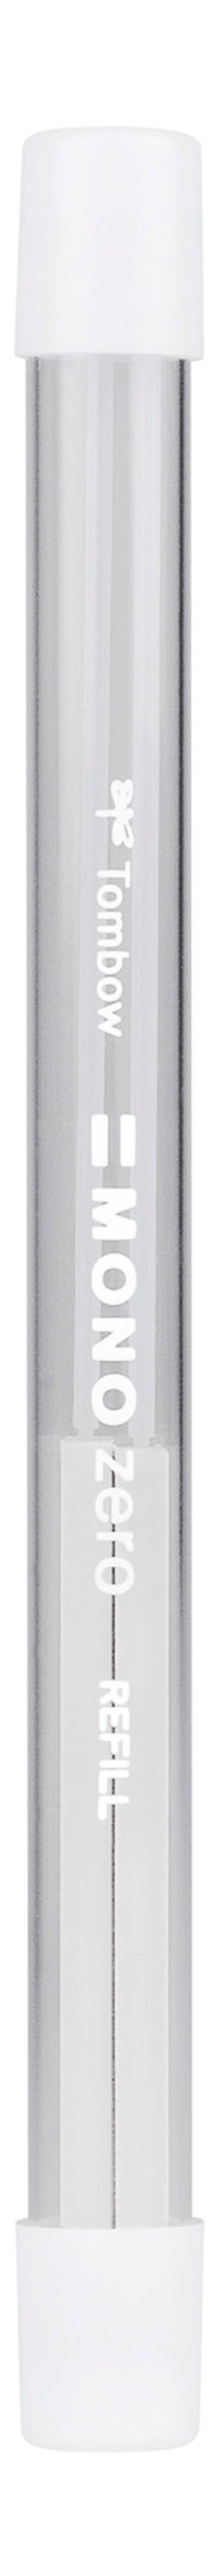 Tombow MONO Zero Refill For Rectangular Tip Eraser Pen White - ER-KUS - ONE CLICK SUPPLIES